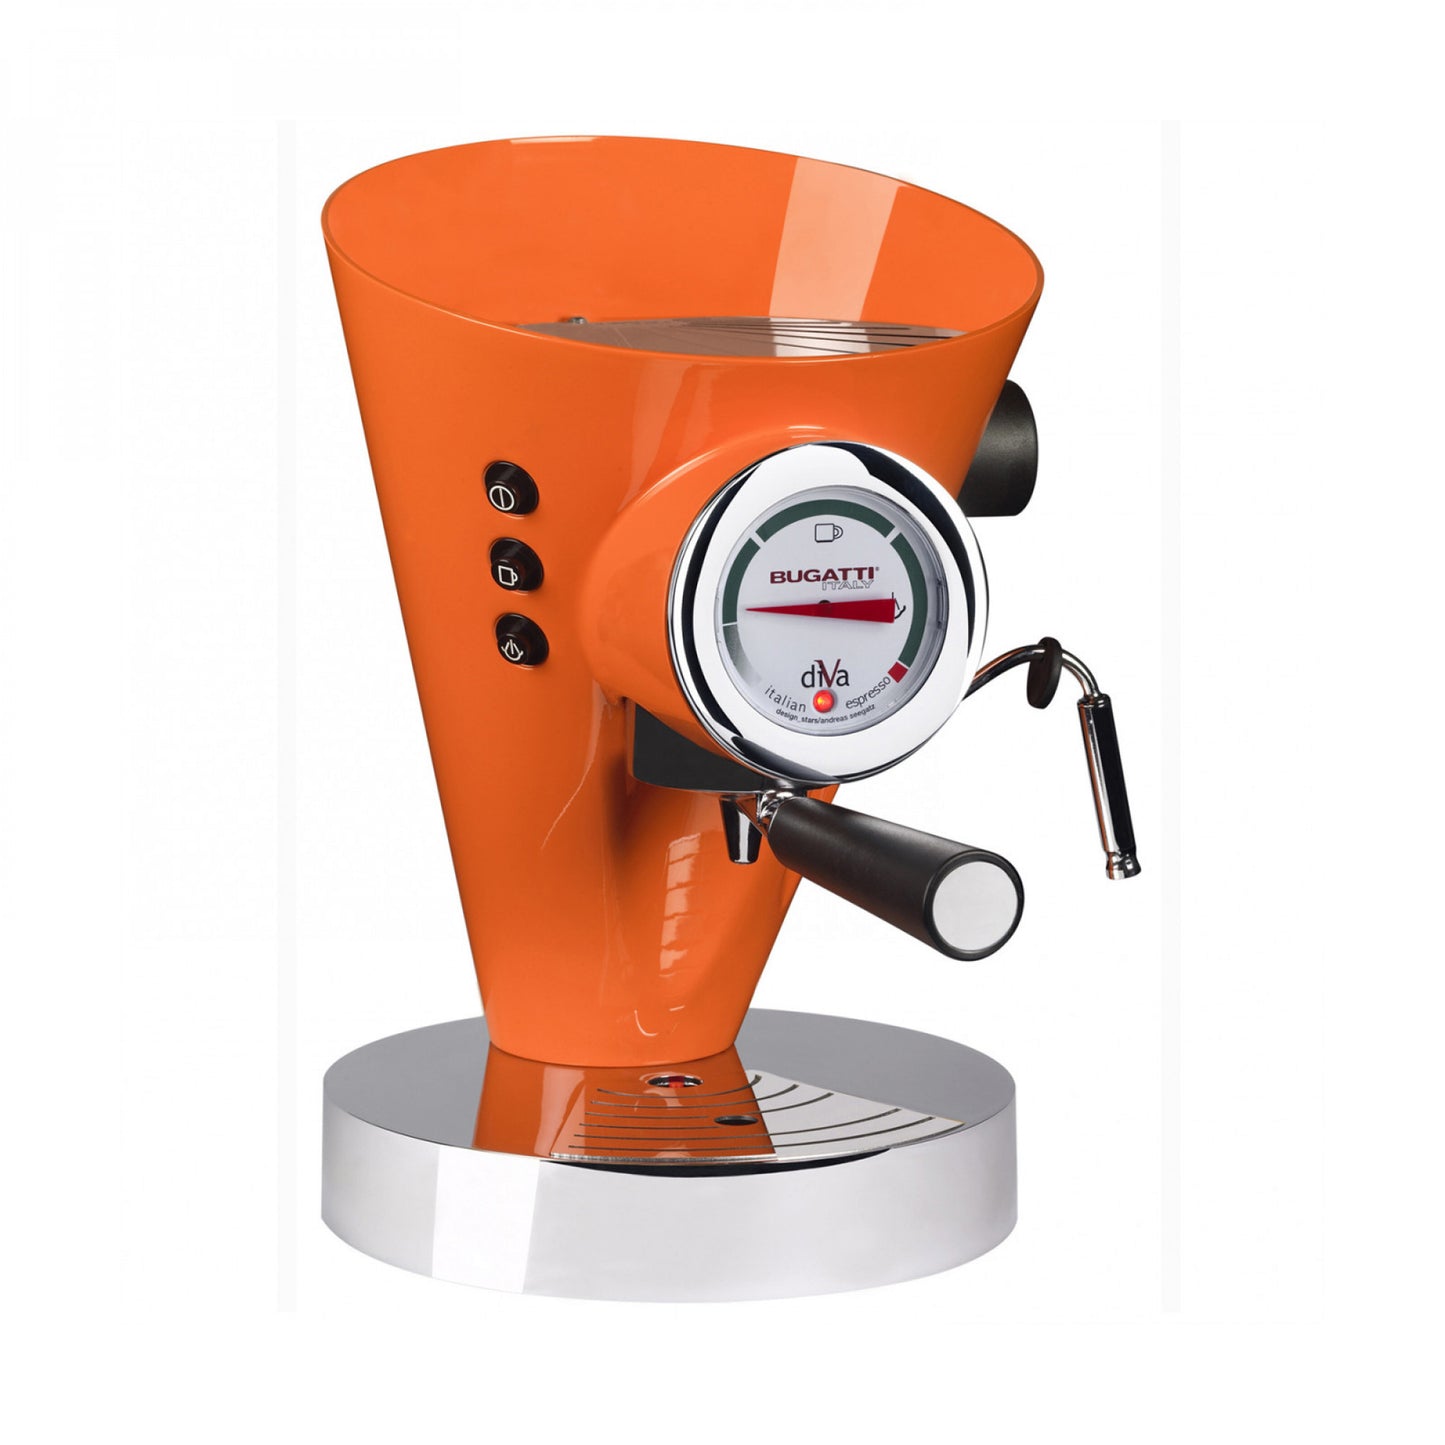 DIVA Espresso Coffee Machine Orange Plain